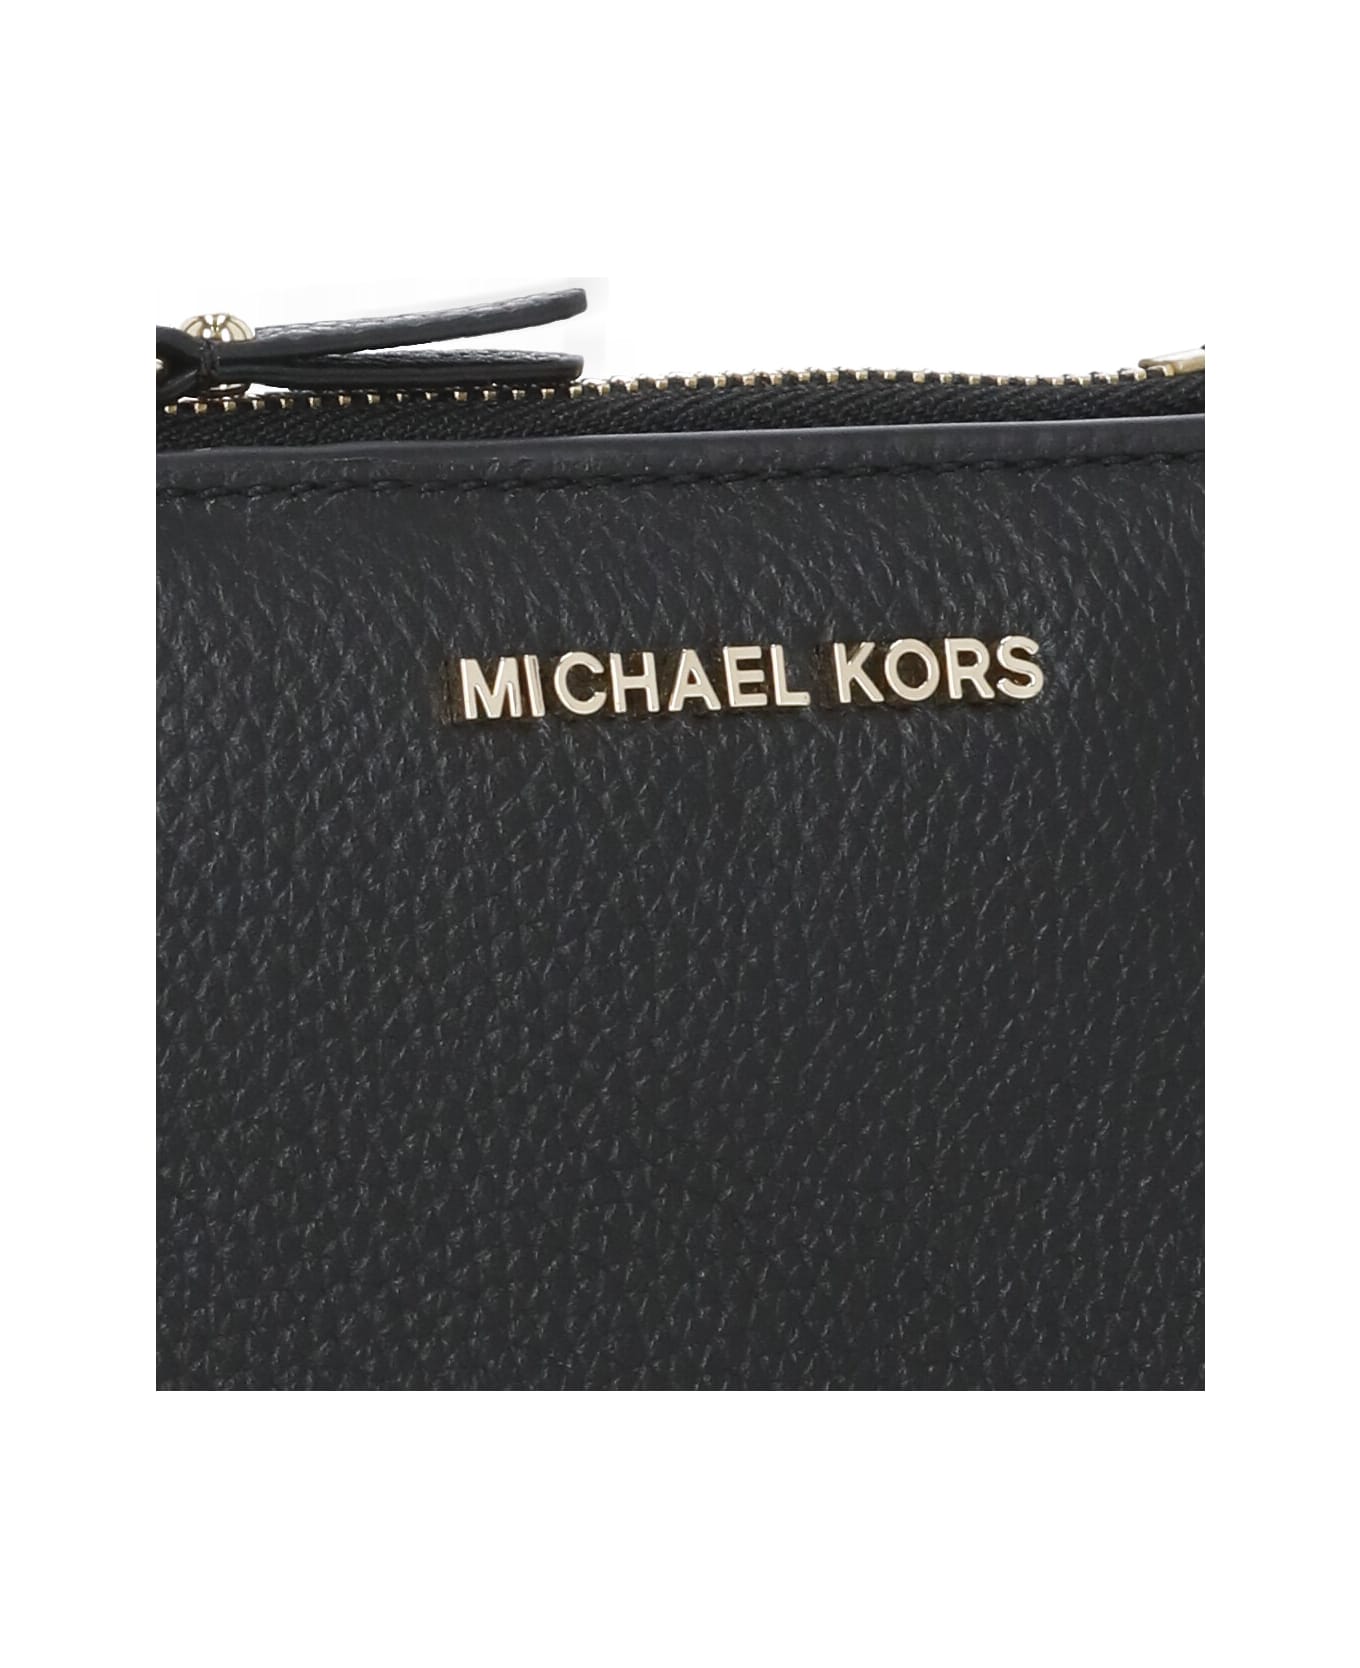 Michael Kors Jet Set Grainy Leather Wallet - Black 財布